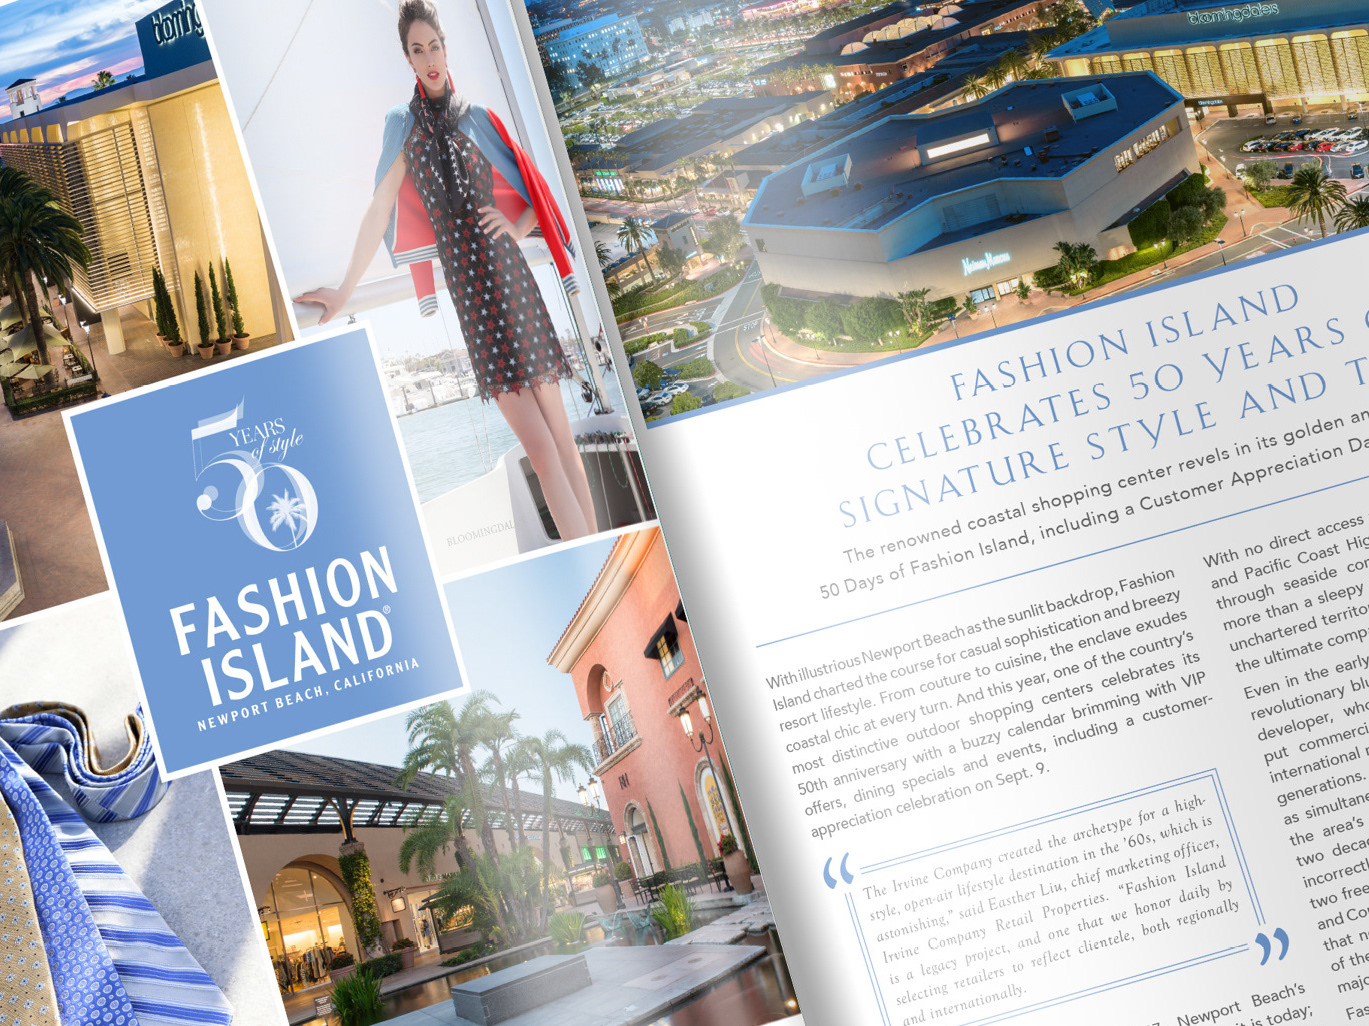 50 Years of Fashion Island